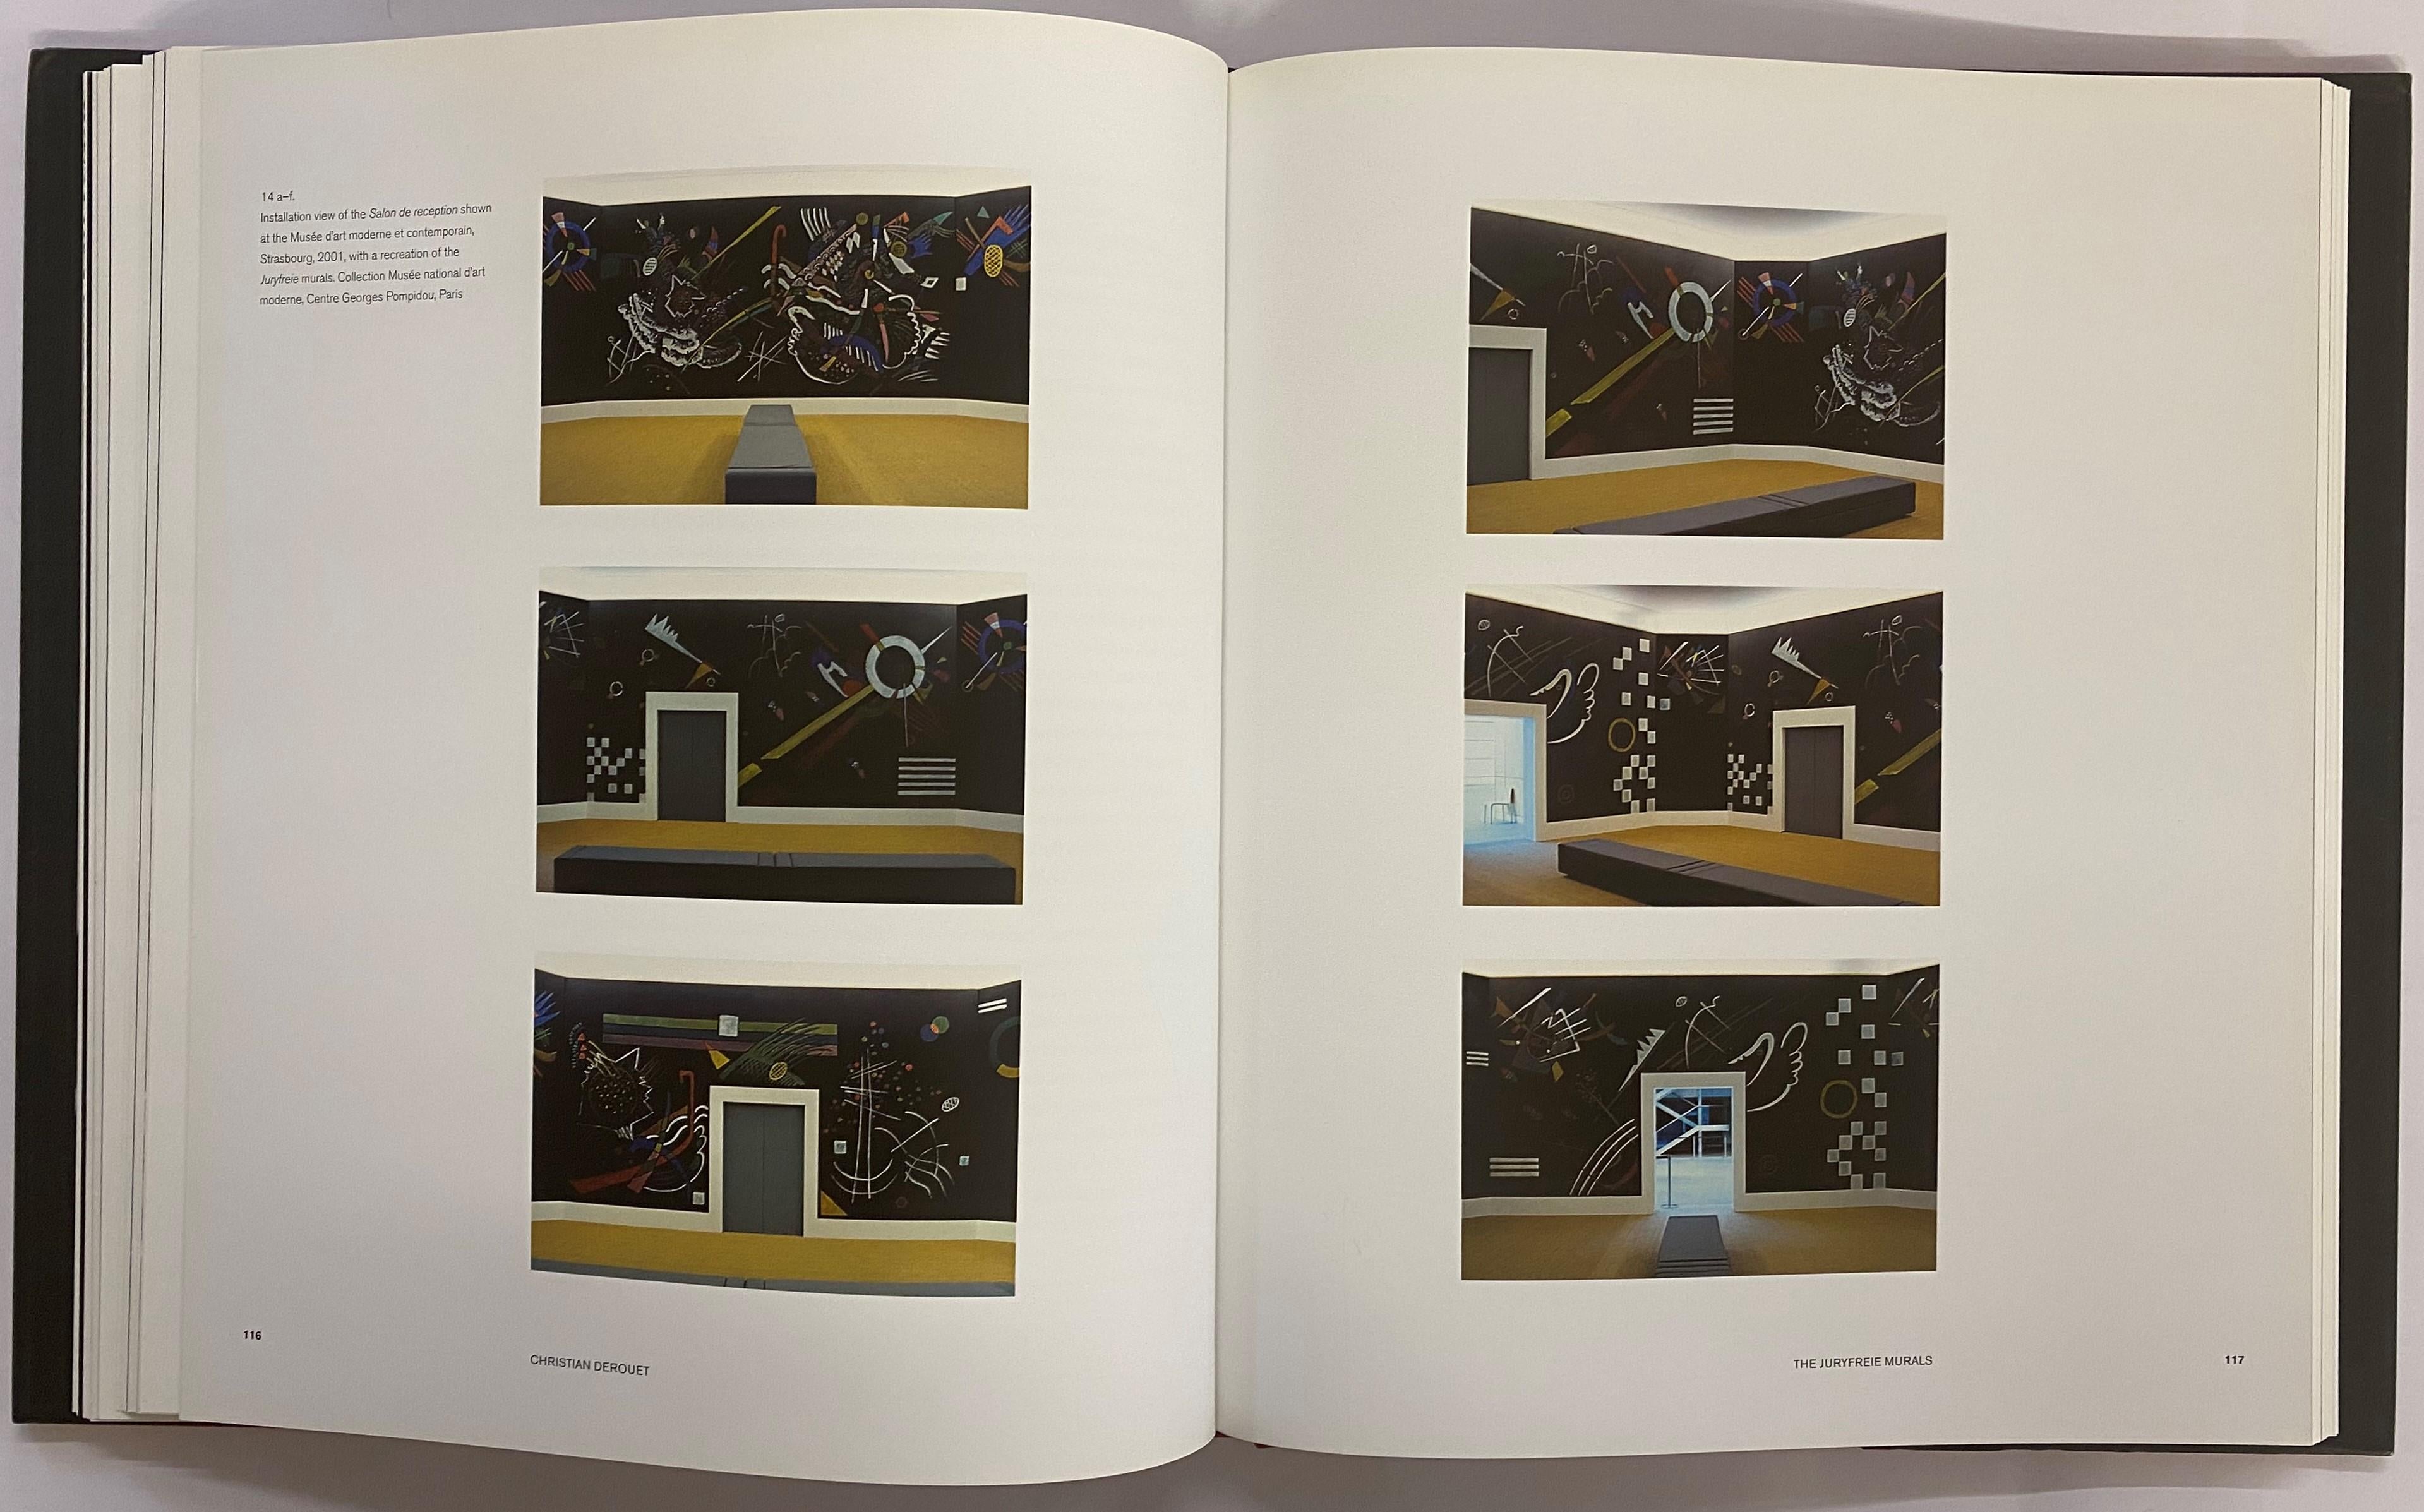 Vasily Kandinsky, from Blaue Reiter to the Bauhaus, 1910-1925 (Book) For Sale 1